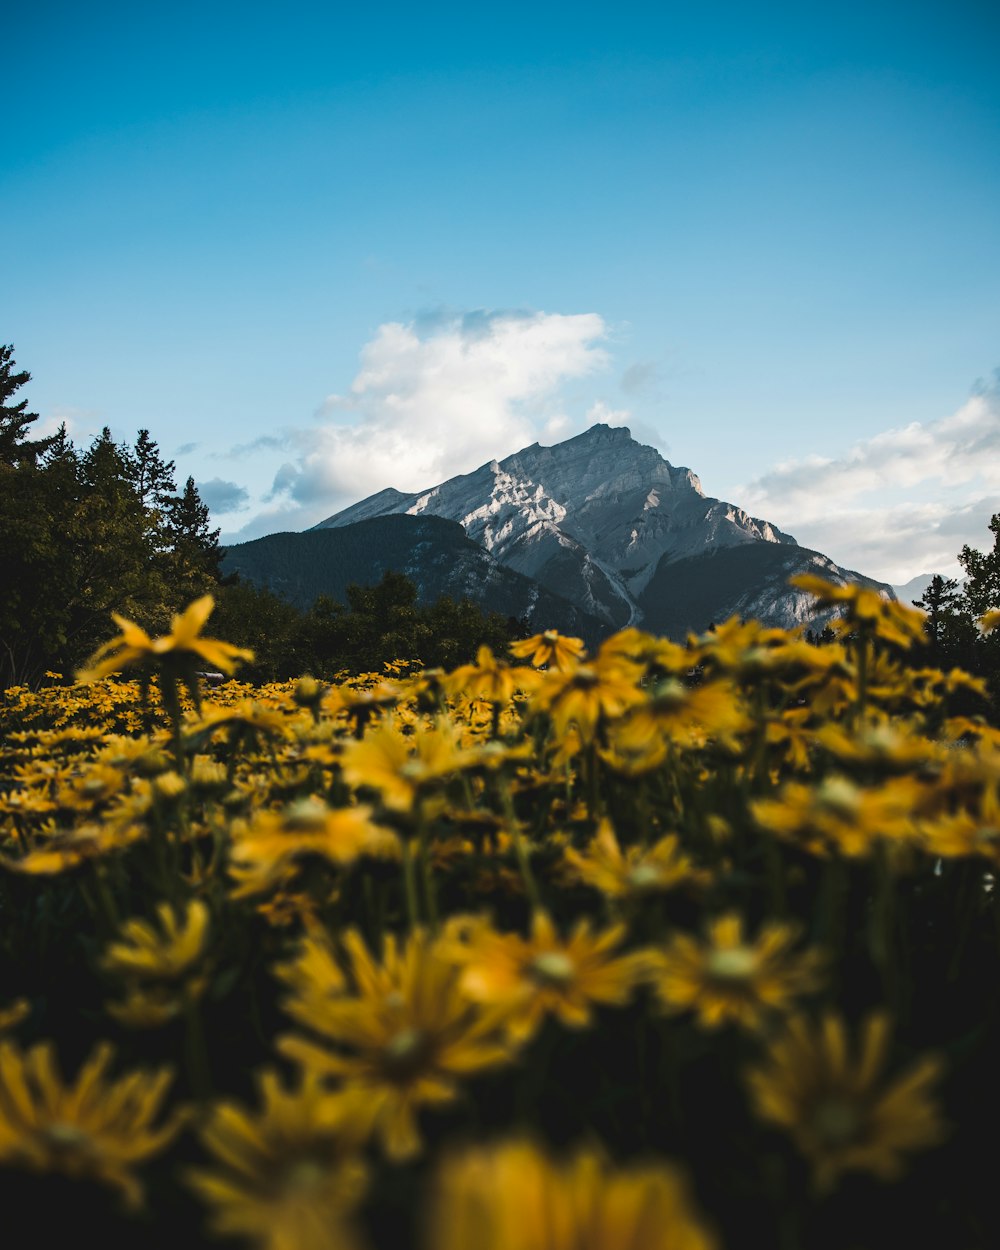 gelbes Blumenfeld in der Nähe des Berges unter blauem Himmel tagsüber